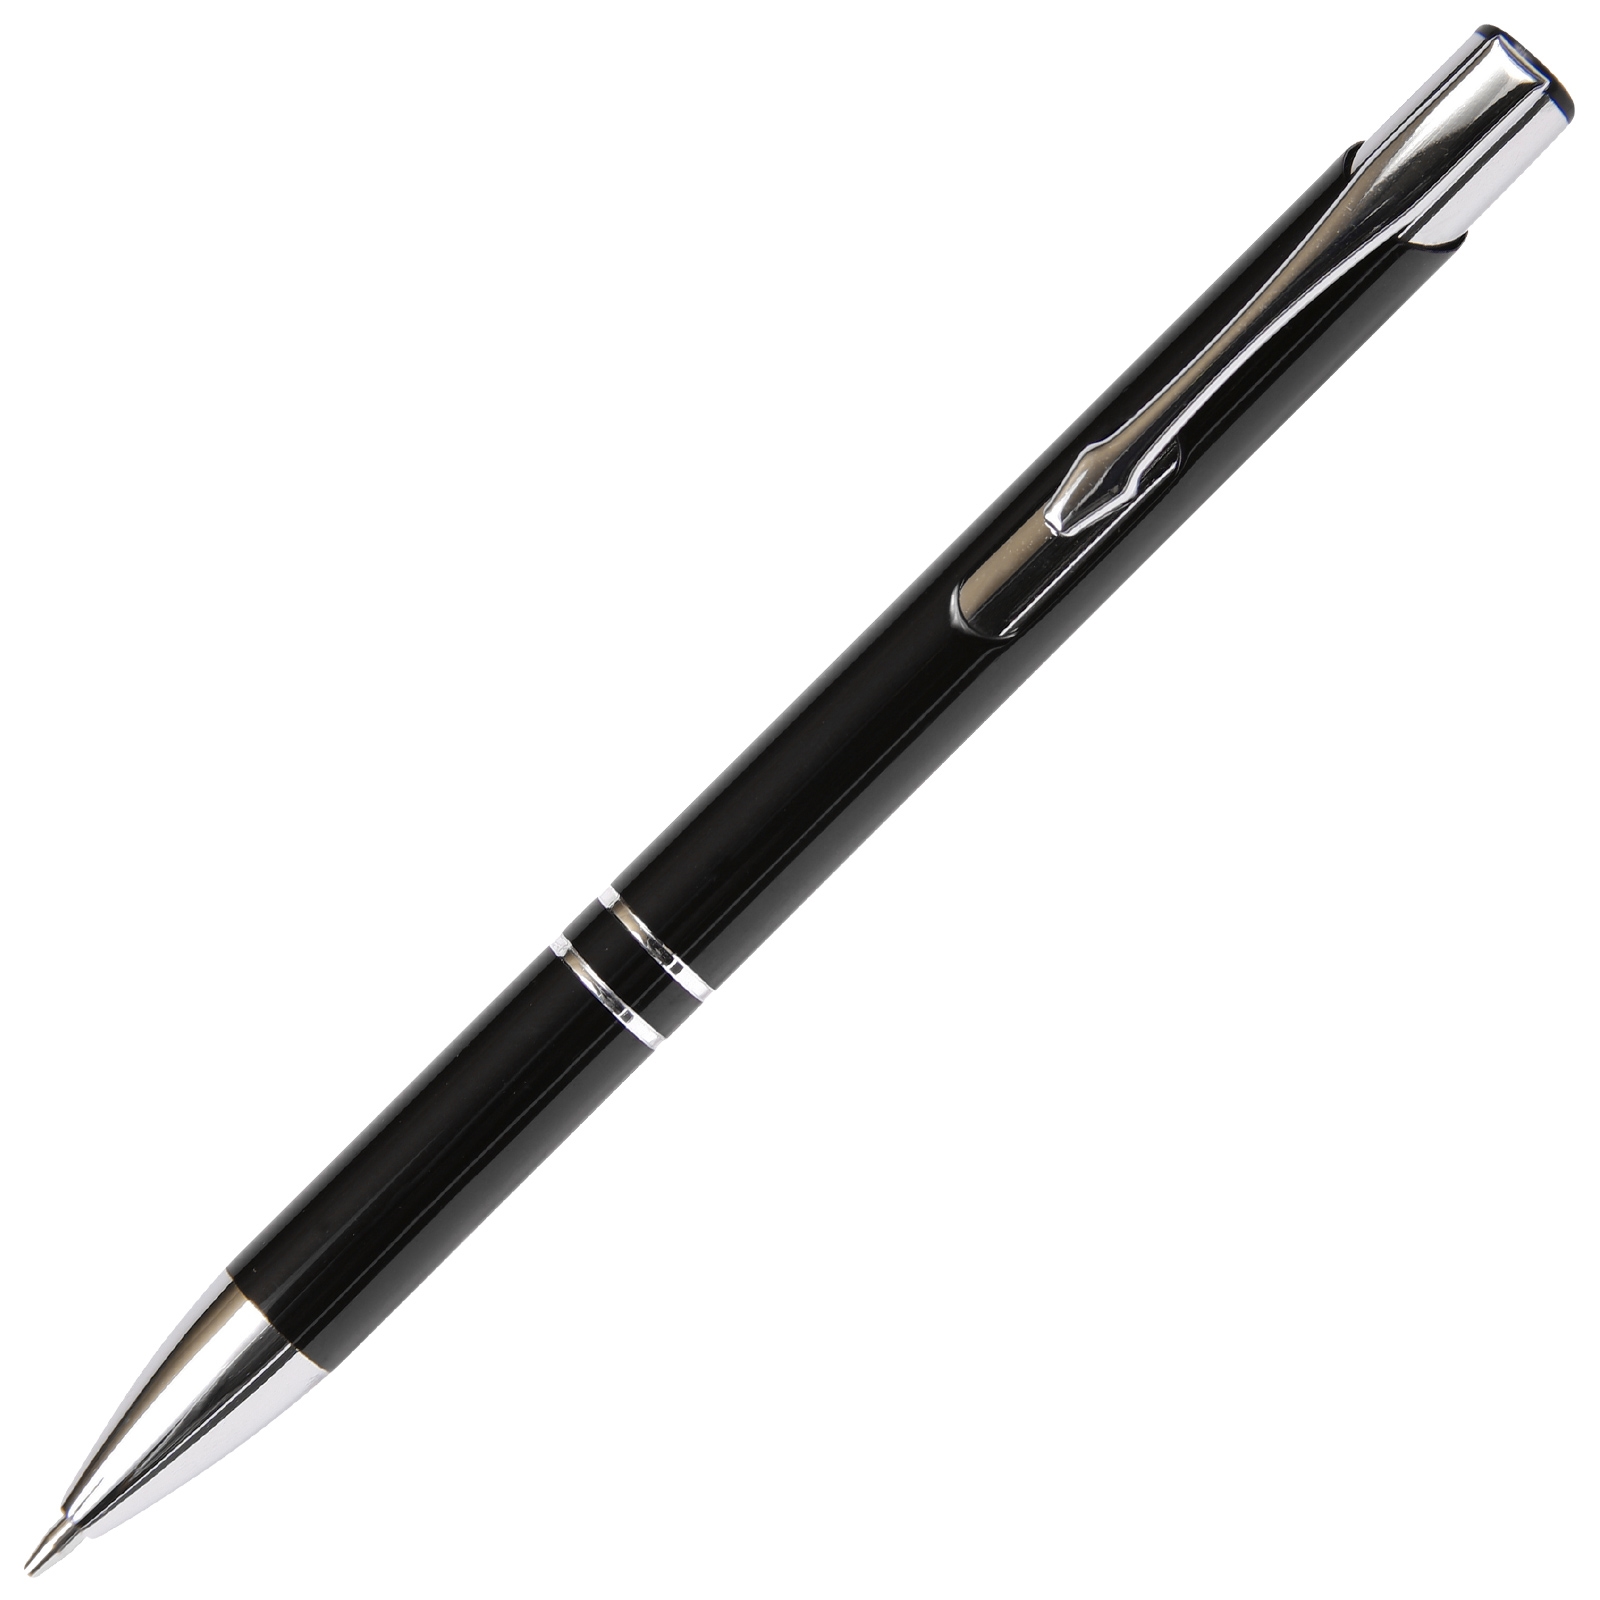 Budget Friendly JJ Mechanical Pencil - Black with Standard 0.5mm Lead Refill By Lanier Pens